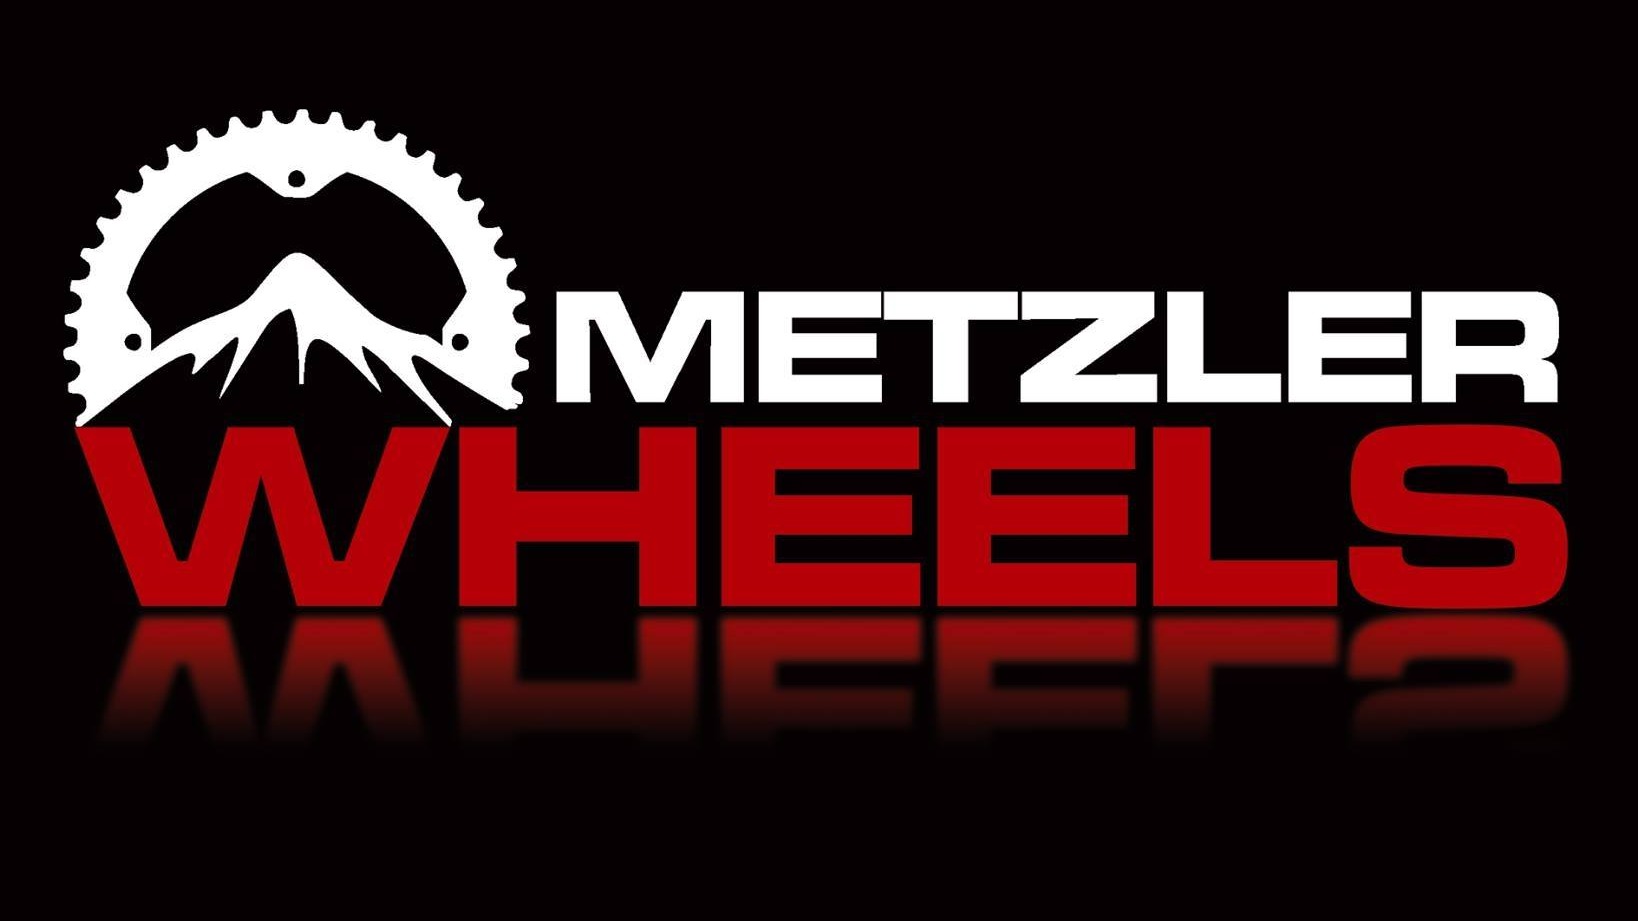 Metzler Wheels Bernd Metzler